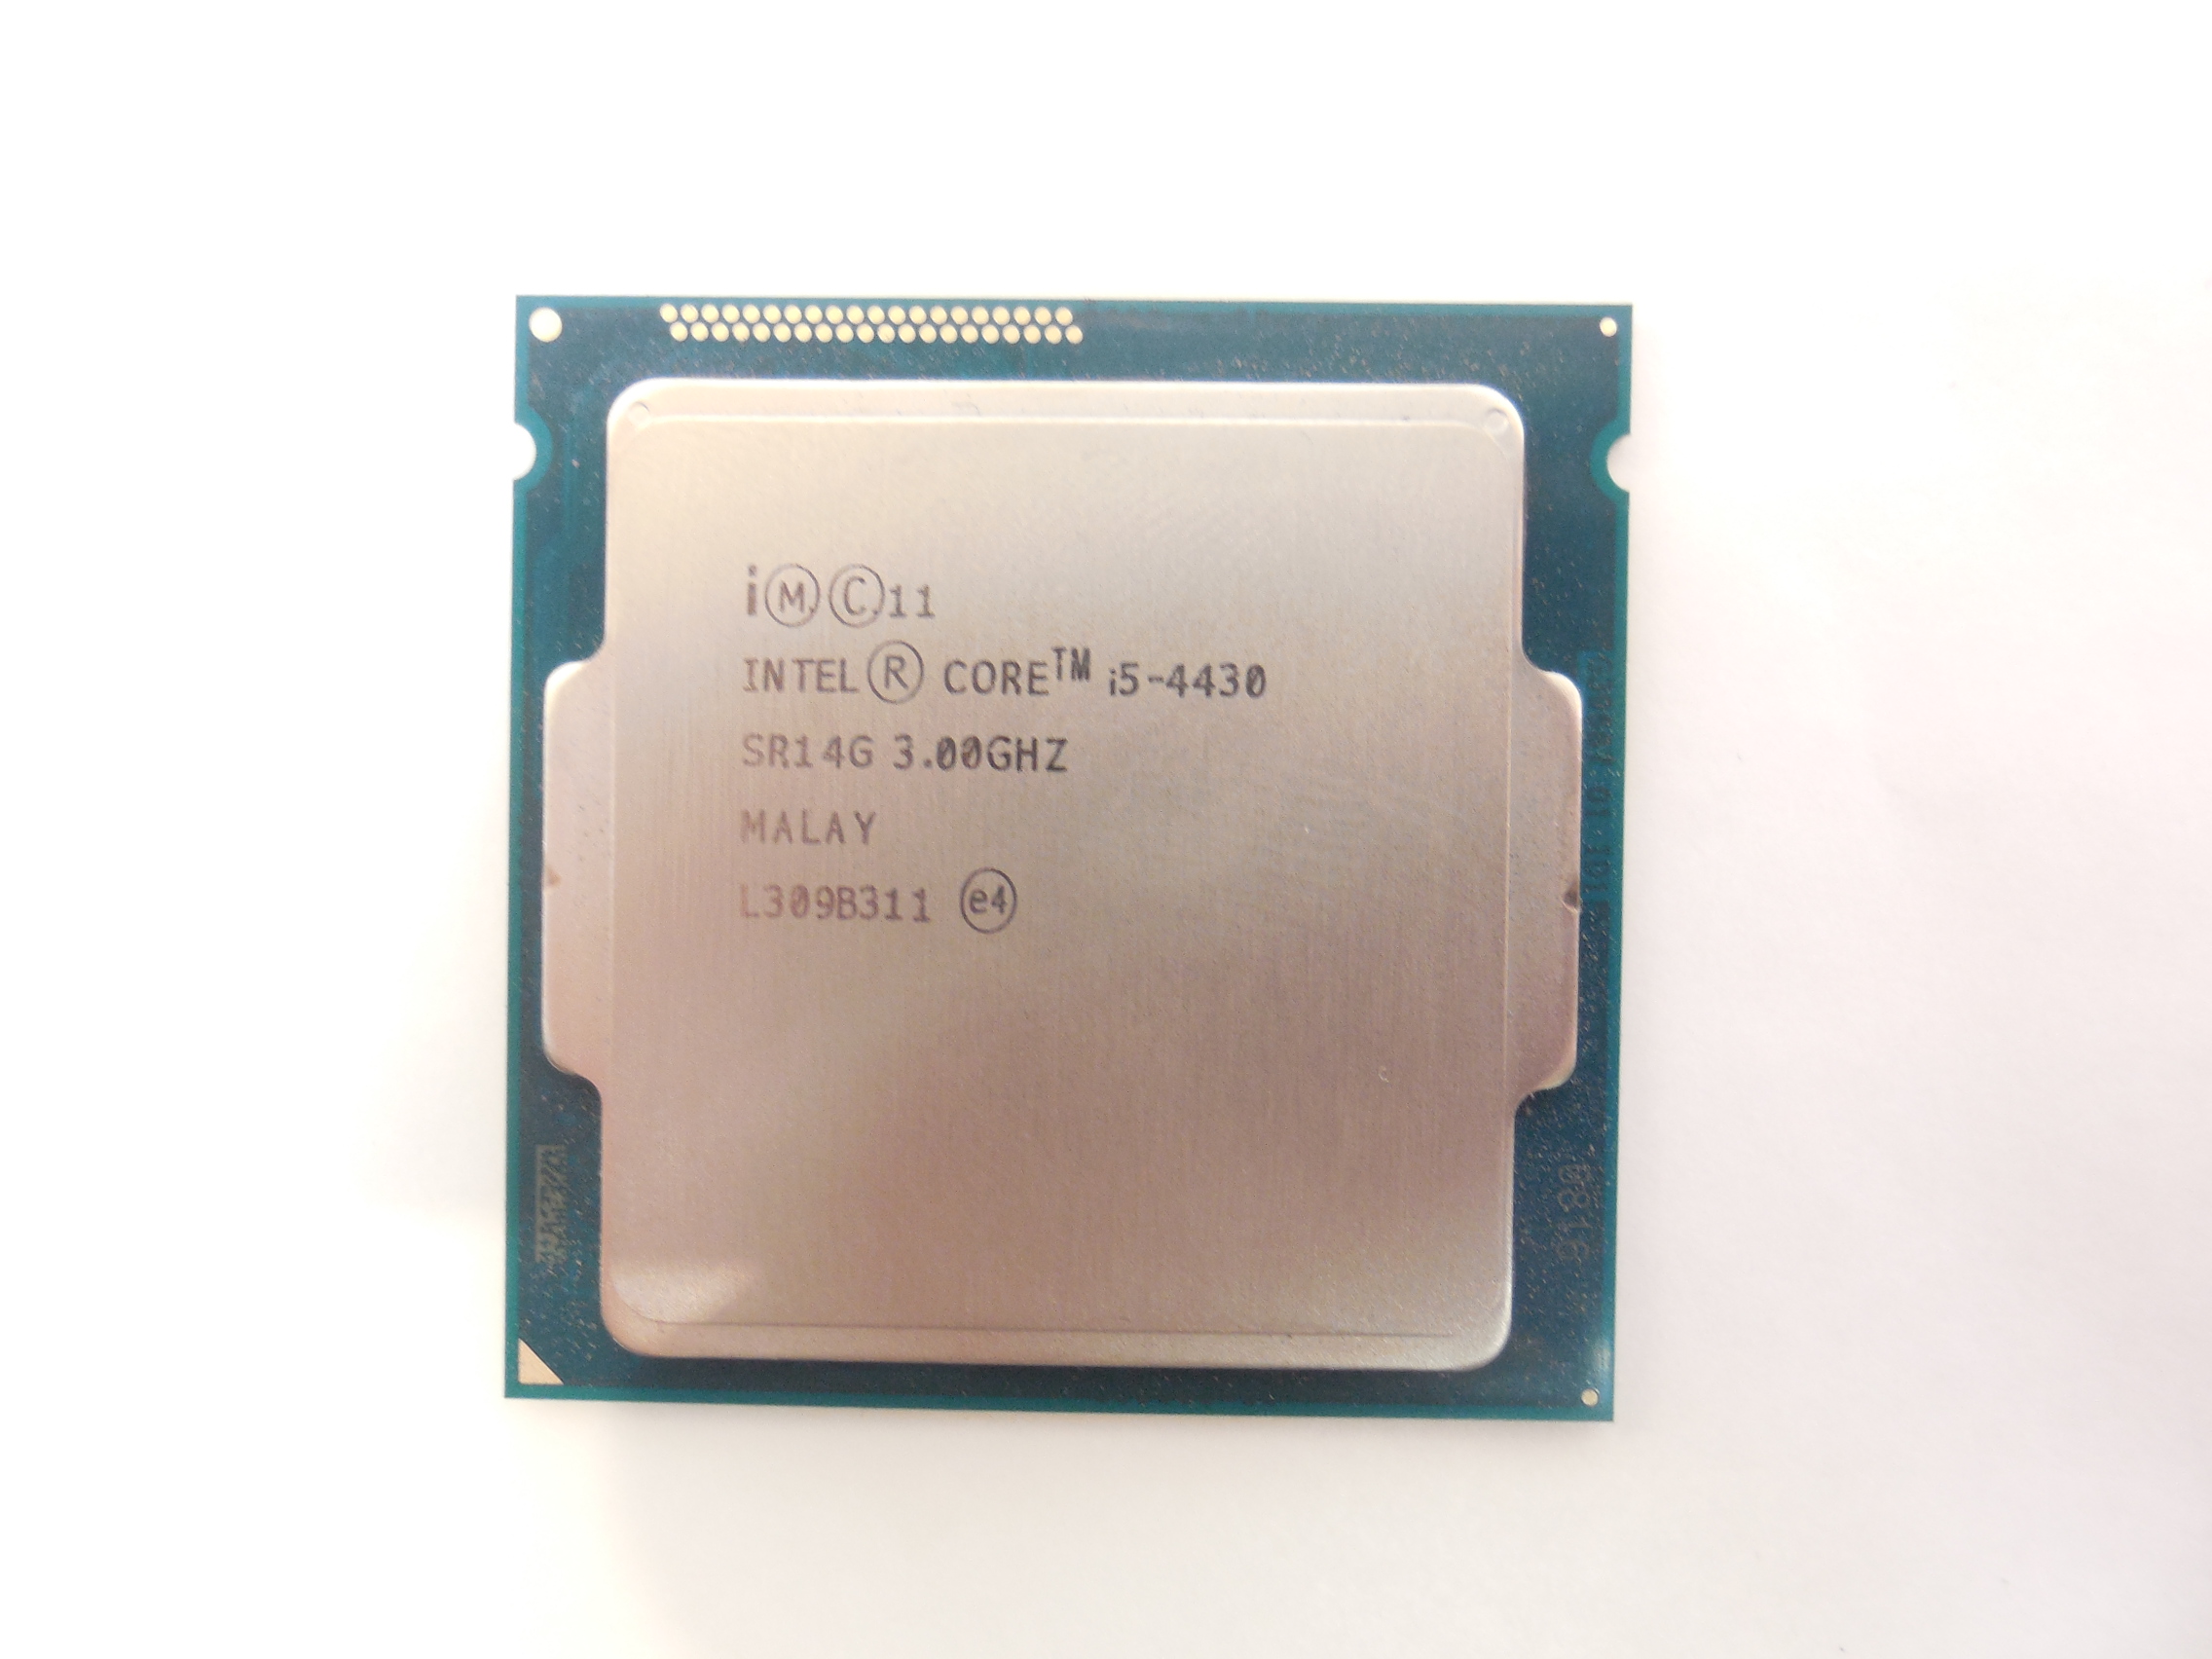 I3 3.3 ghz. Intel(r) Core(TM) i5-4430 CPU @ 3.00GHZ. Intel(r) Core(TM) i5-4430 CPU @ 3.00GHZ 3.00 GHZ. Процессор Intel Core i7-4770 Haswell lga1150, 4 x 3400 МГЦ, OEM. Intel Core i3 — 4430.